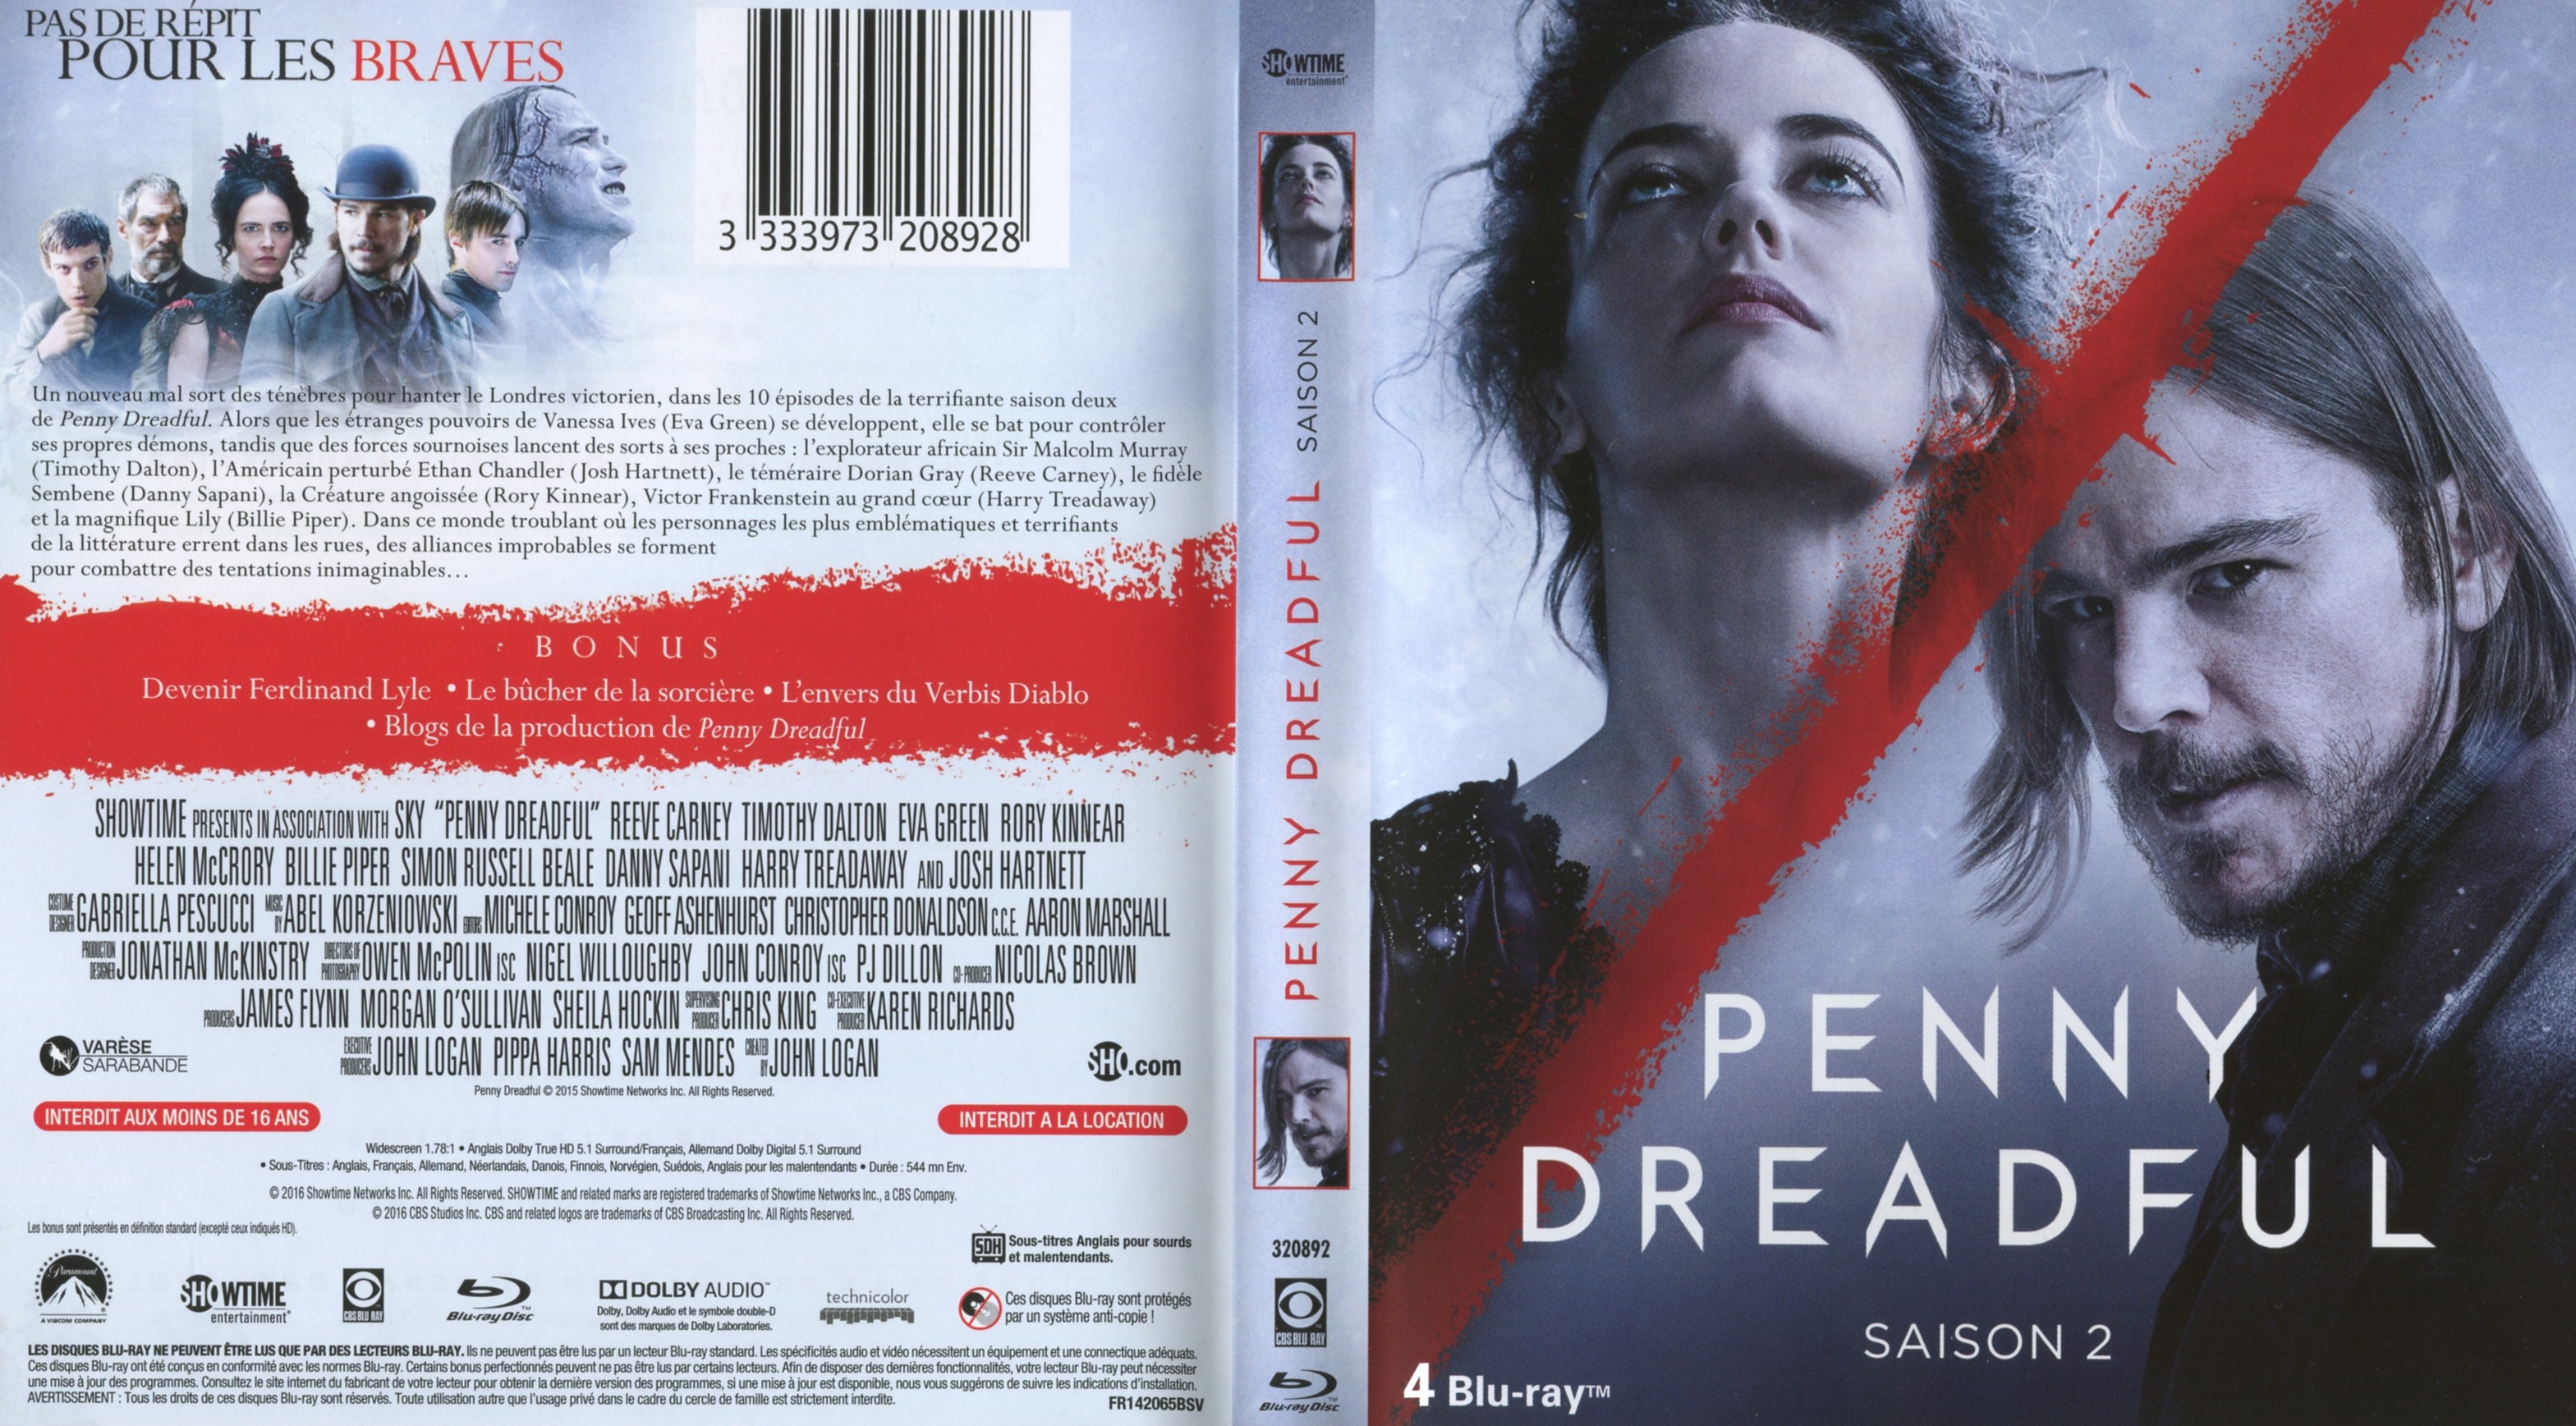 Jaquette DVD Penny Dreadful Saison 2 (BLU-RAY)